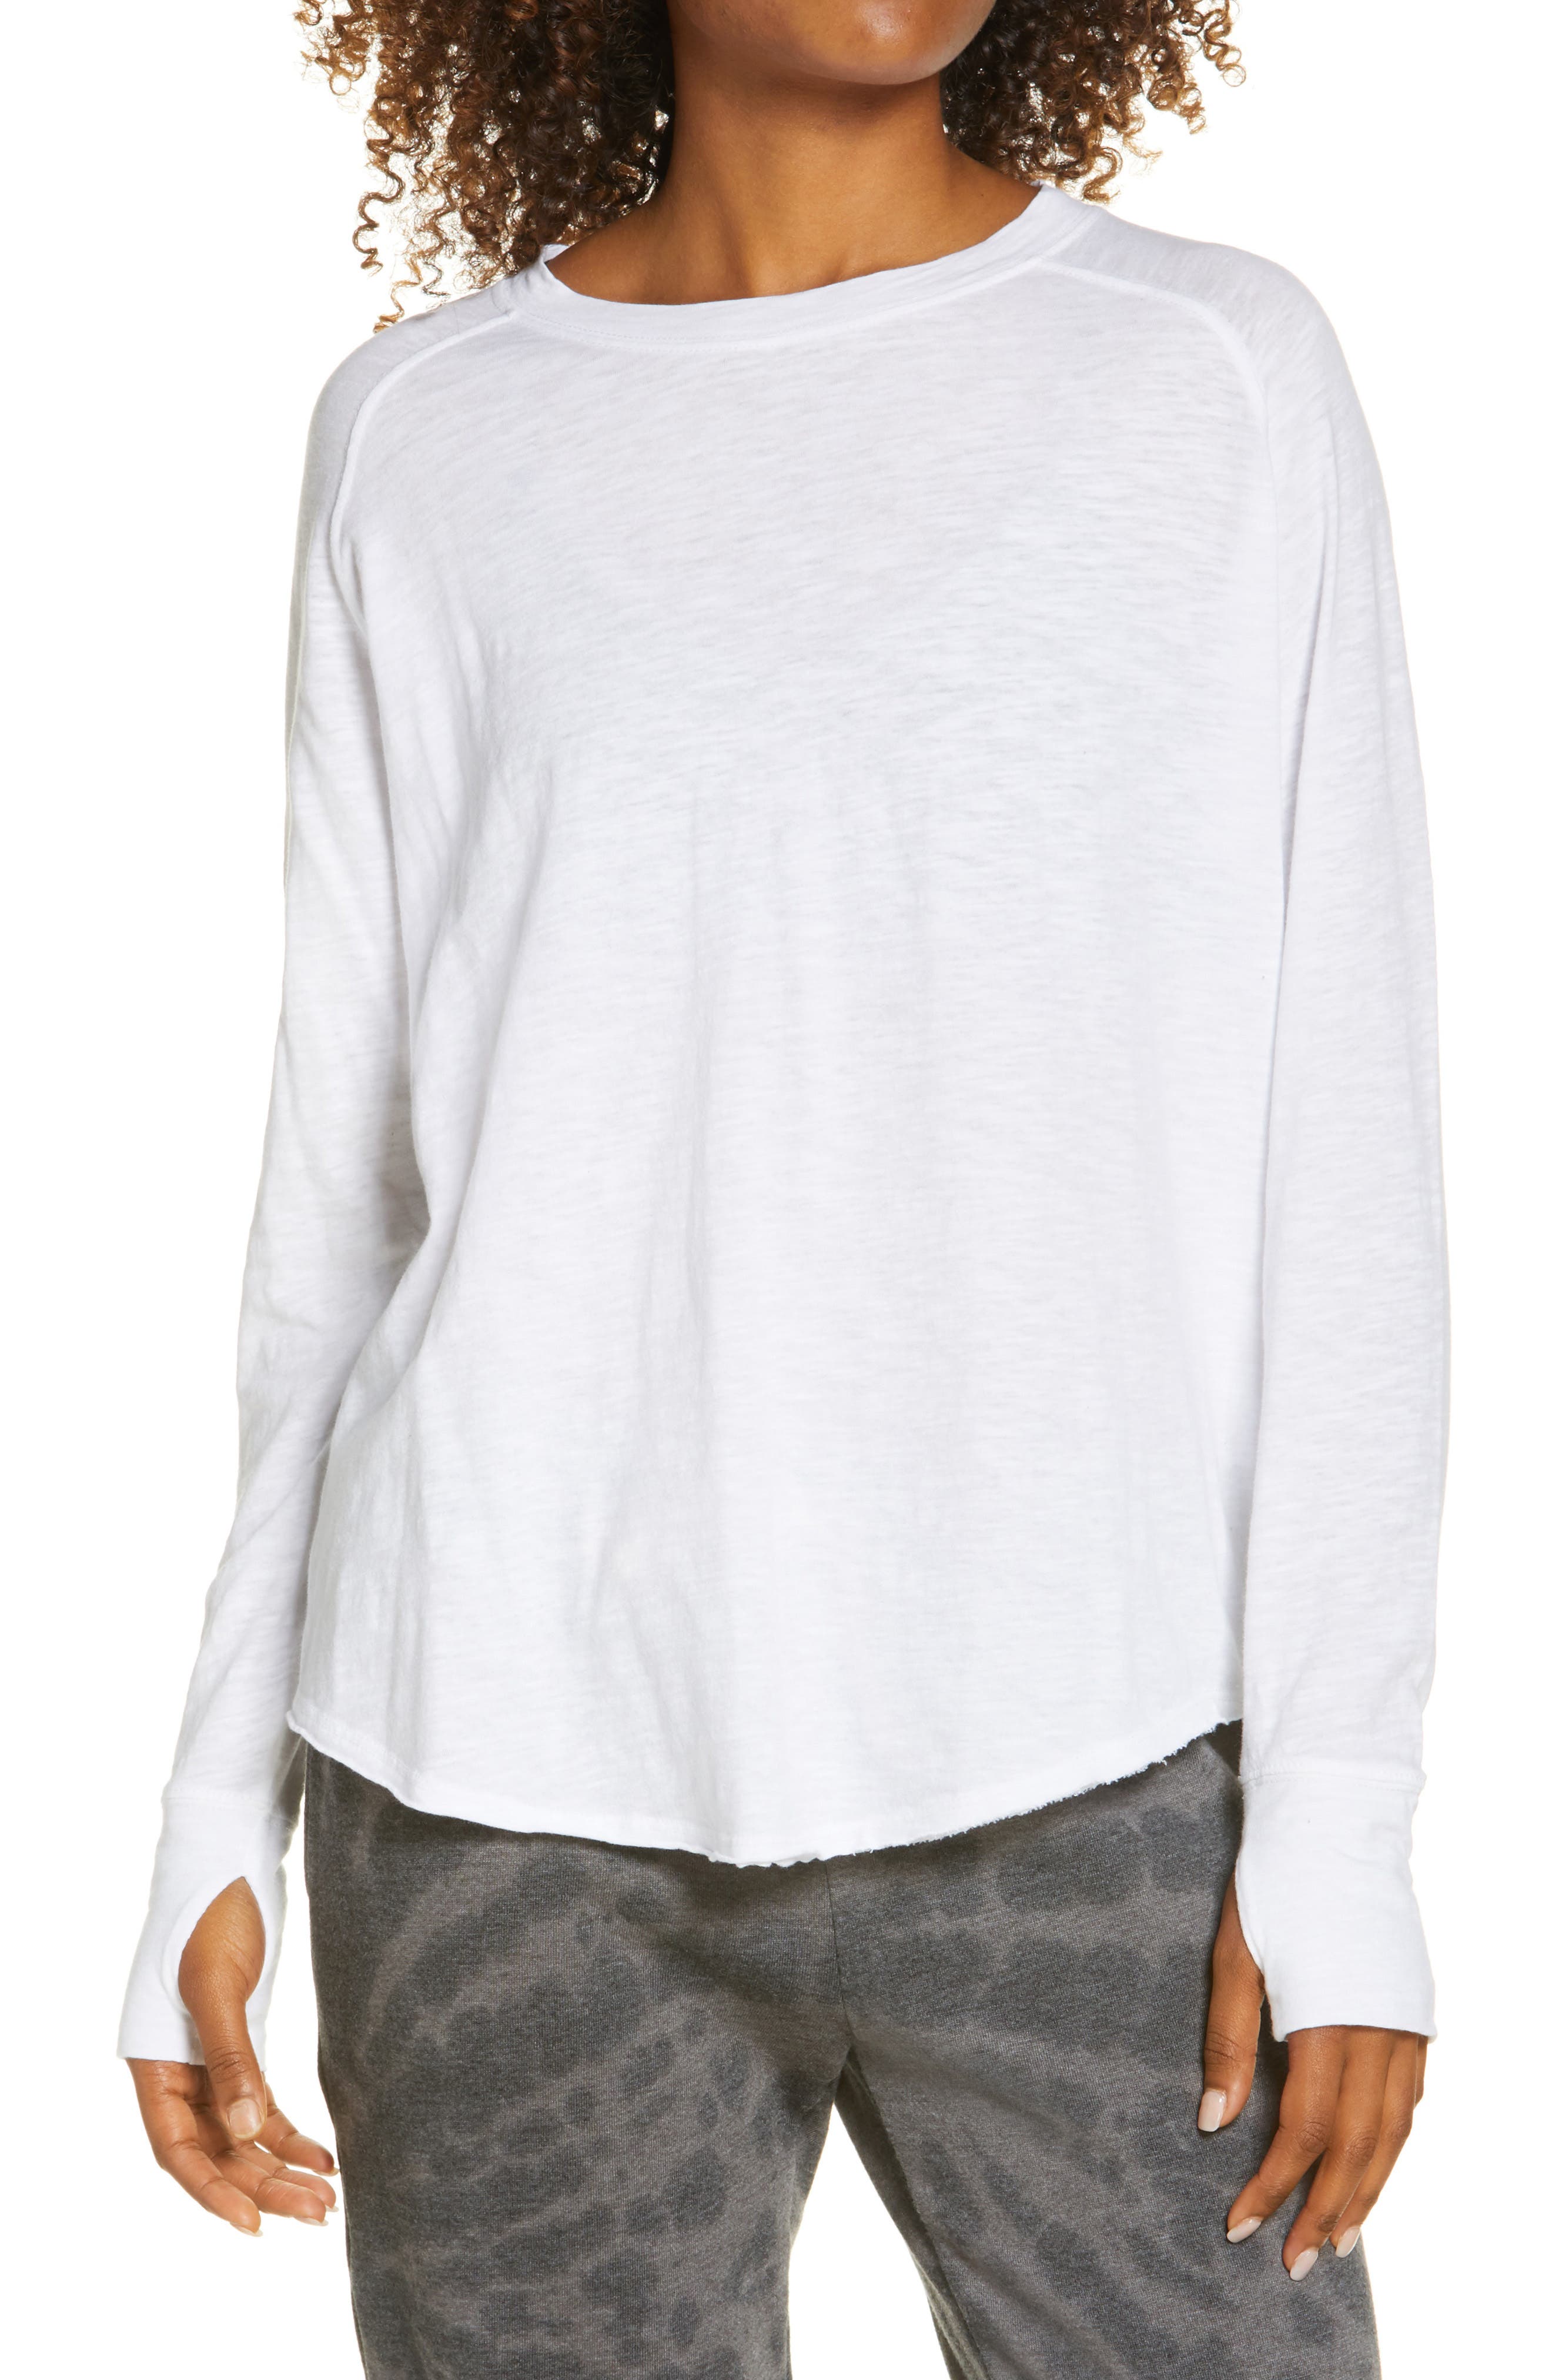 Womens T-Shirts Slim Long Sleeve v Neck T Shirts Sweatshirts Cotton Black t-Shirt Tops Jinjiums